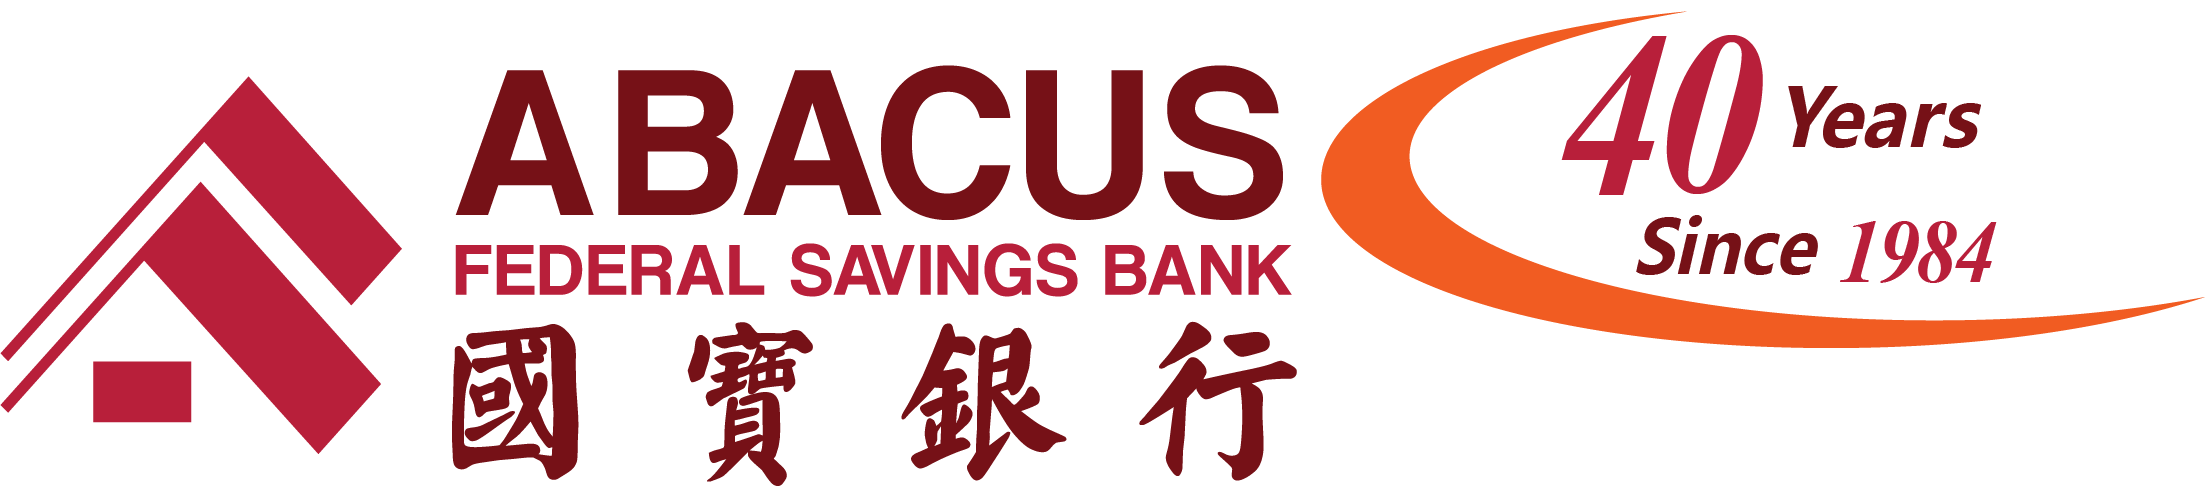 Abacus Bank home